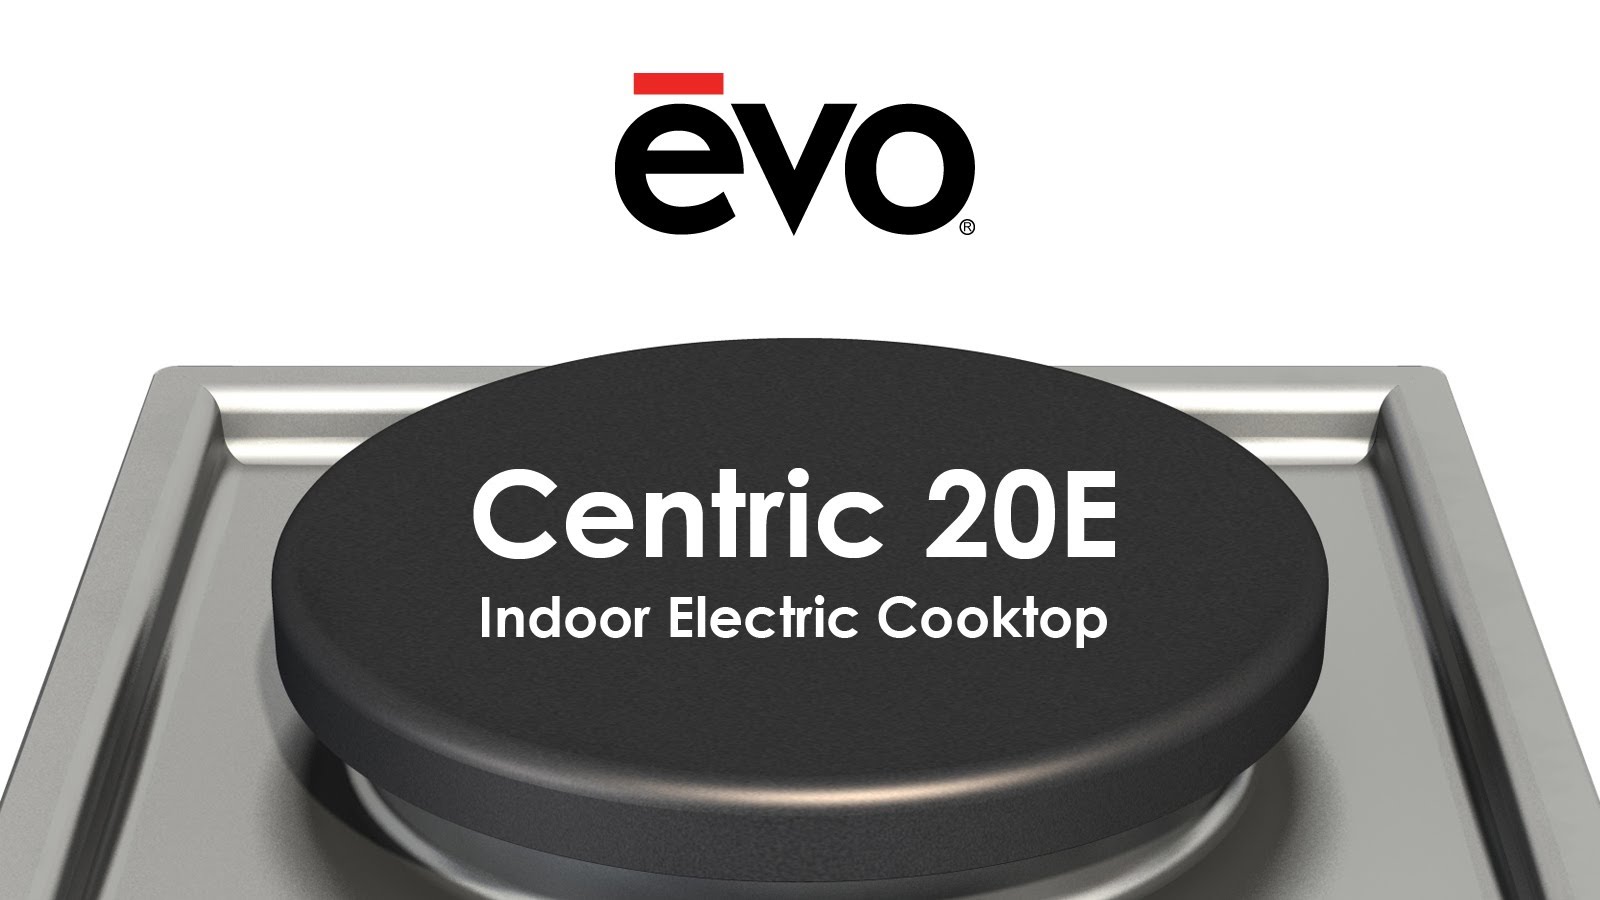 Evo – Centric 20E Cooking Station